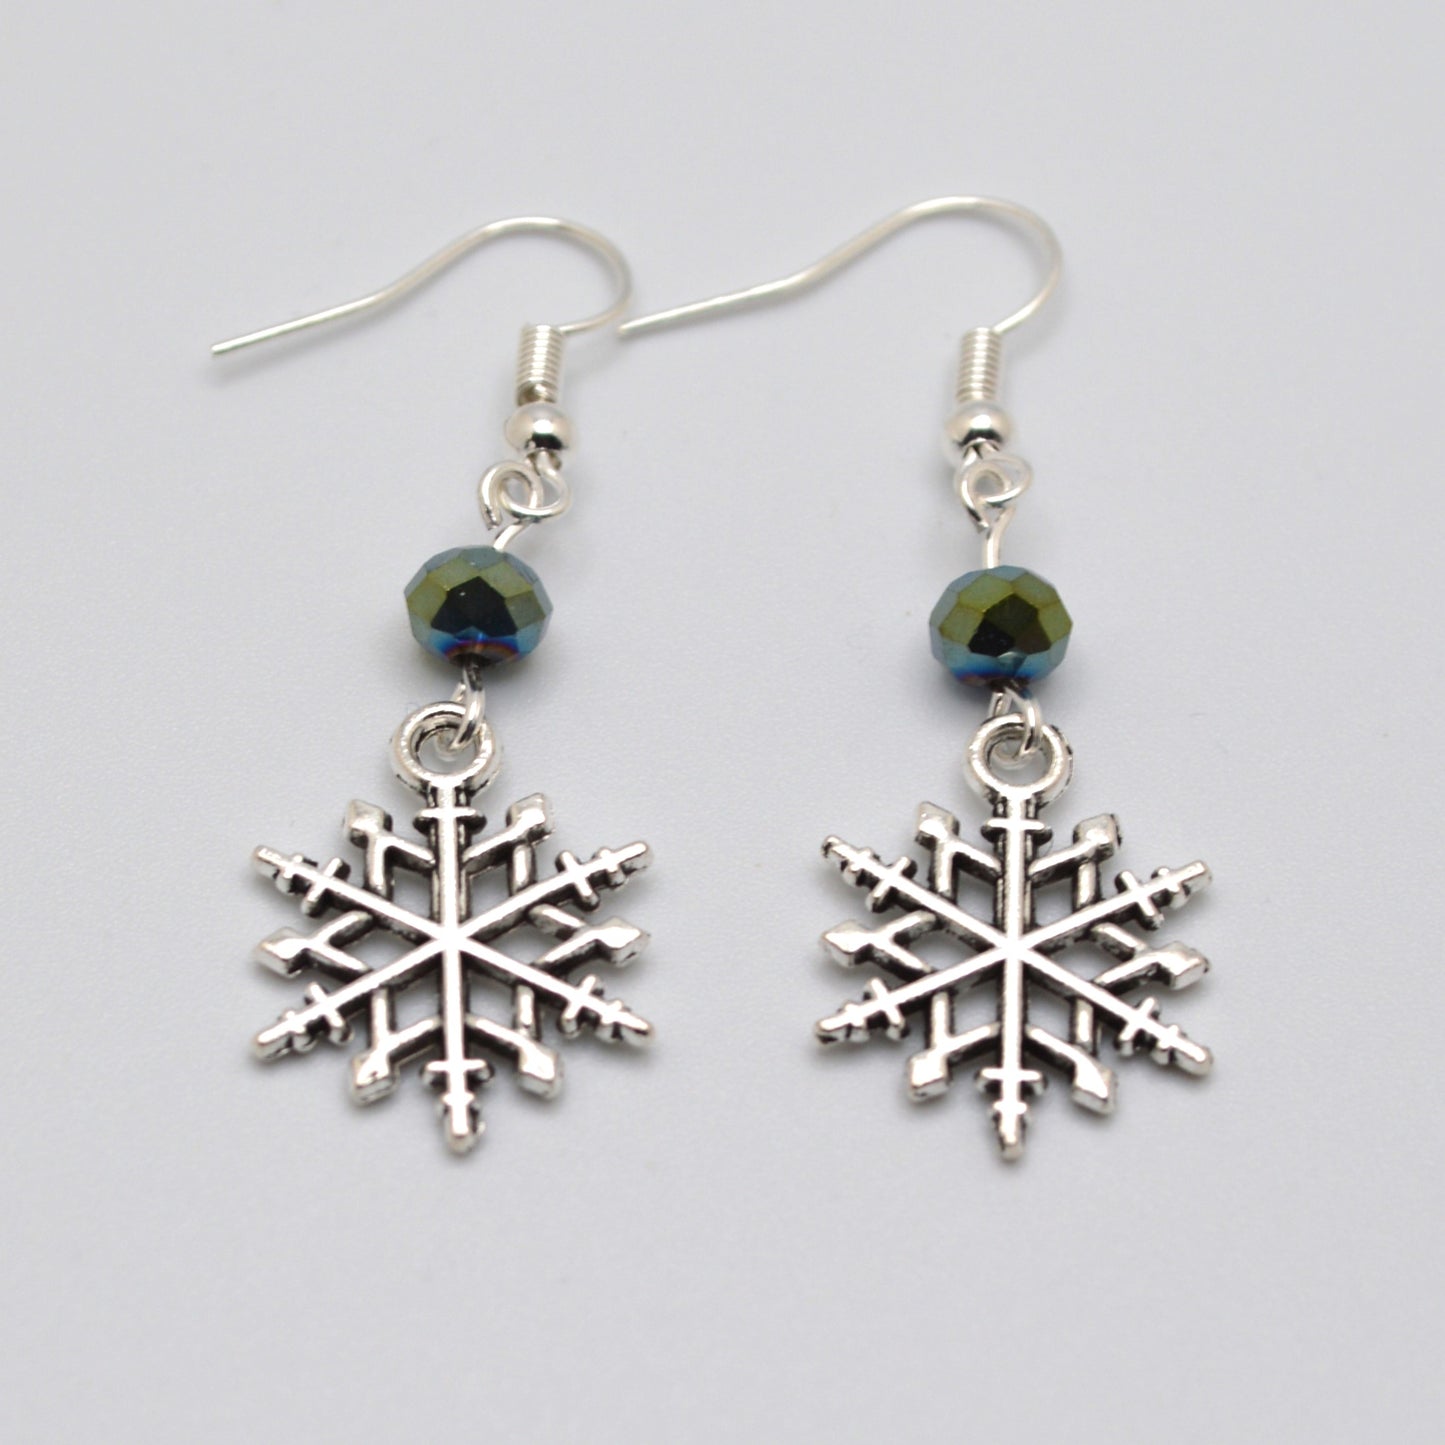 Snowflake Earrings #5 (Green Blue)